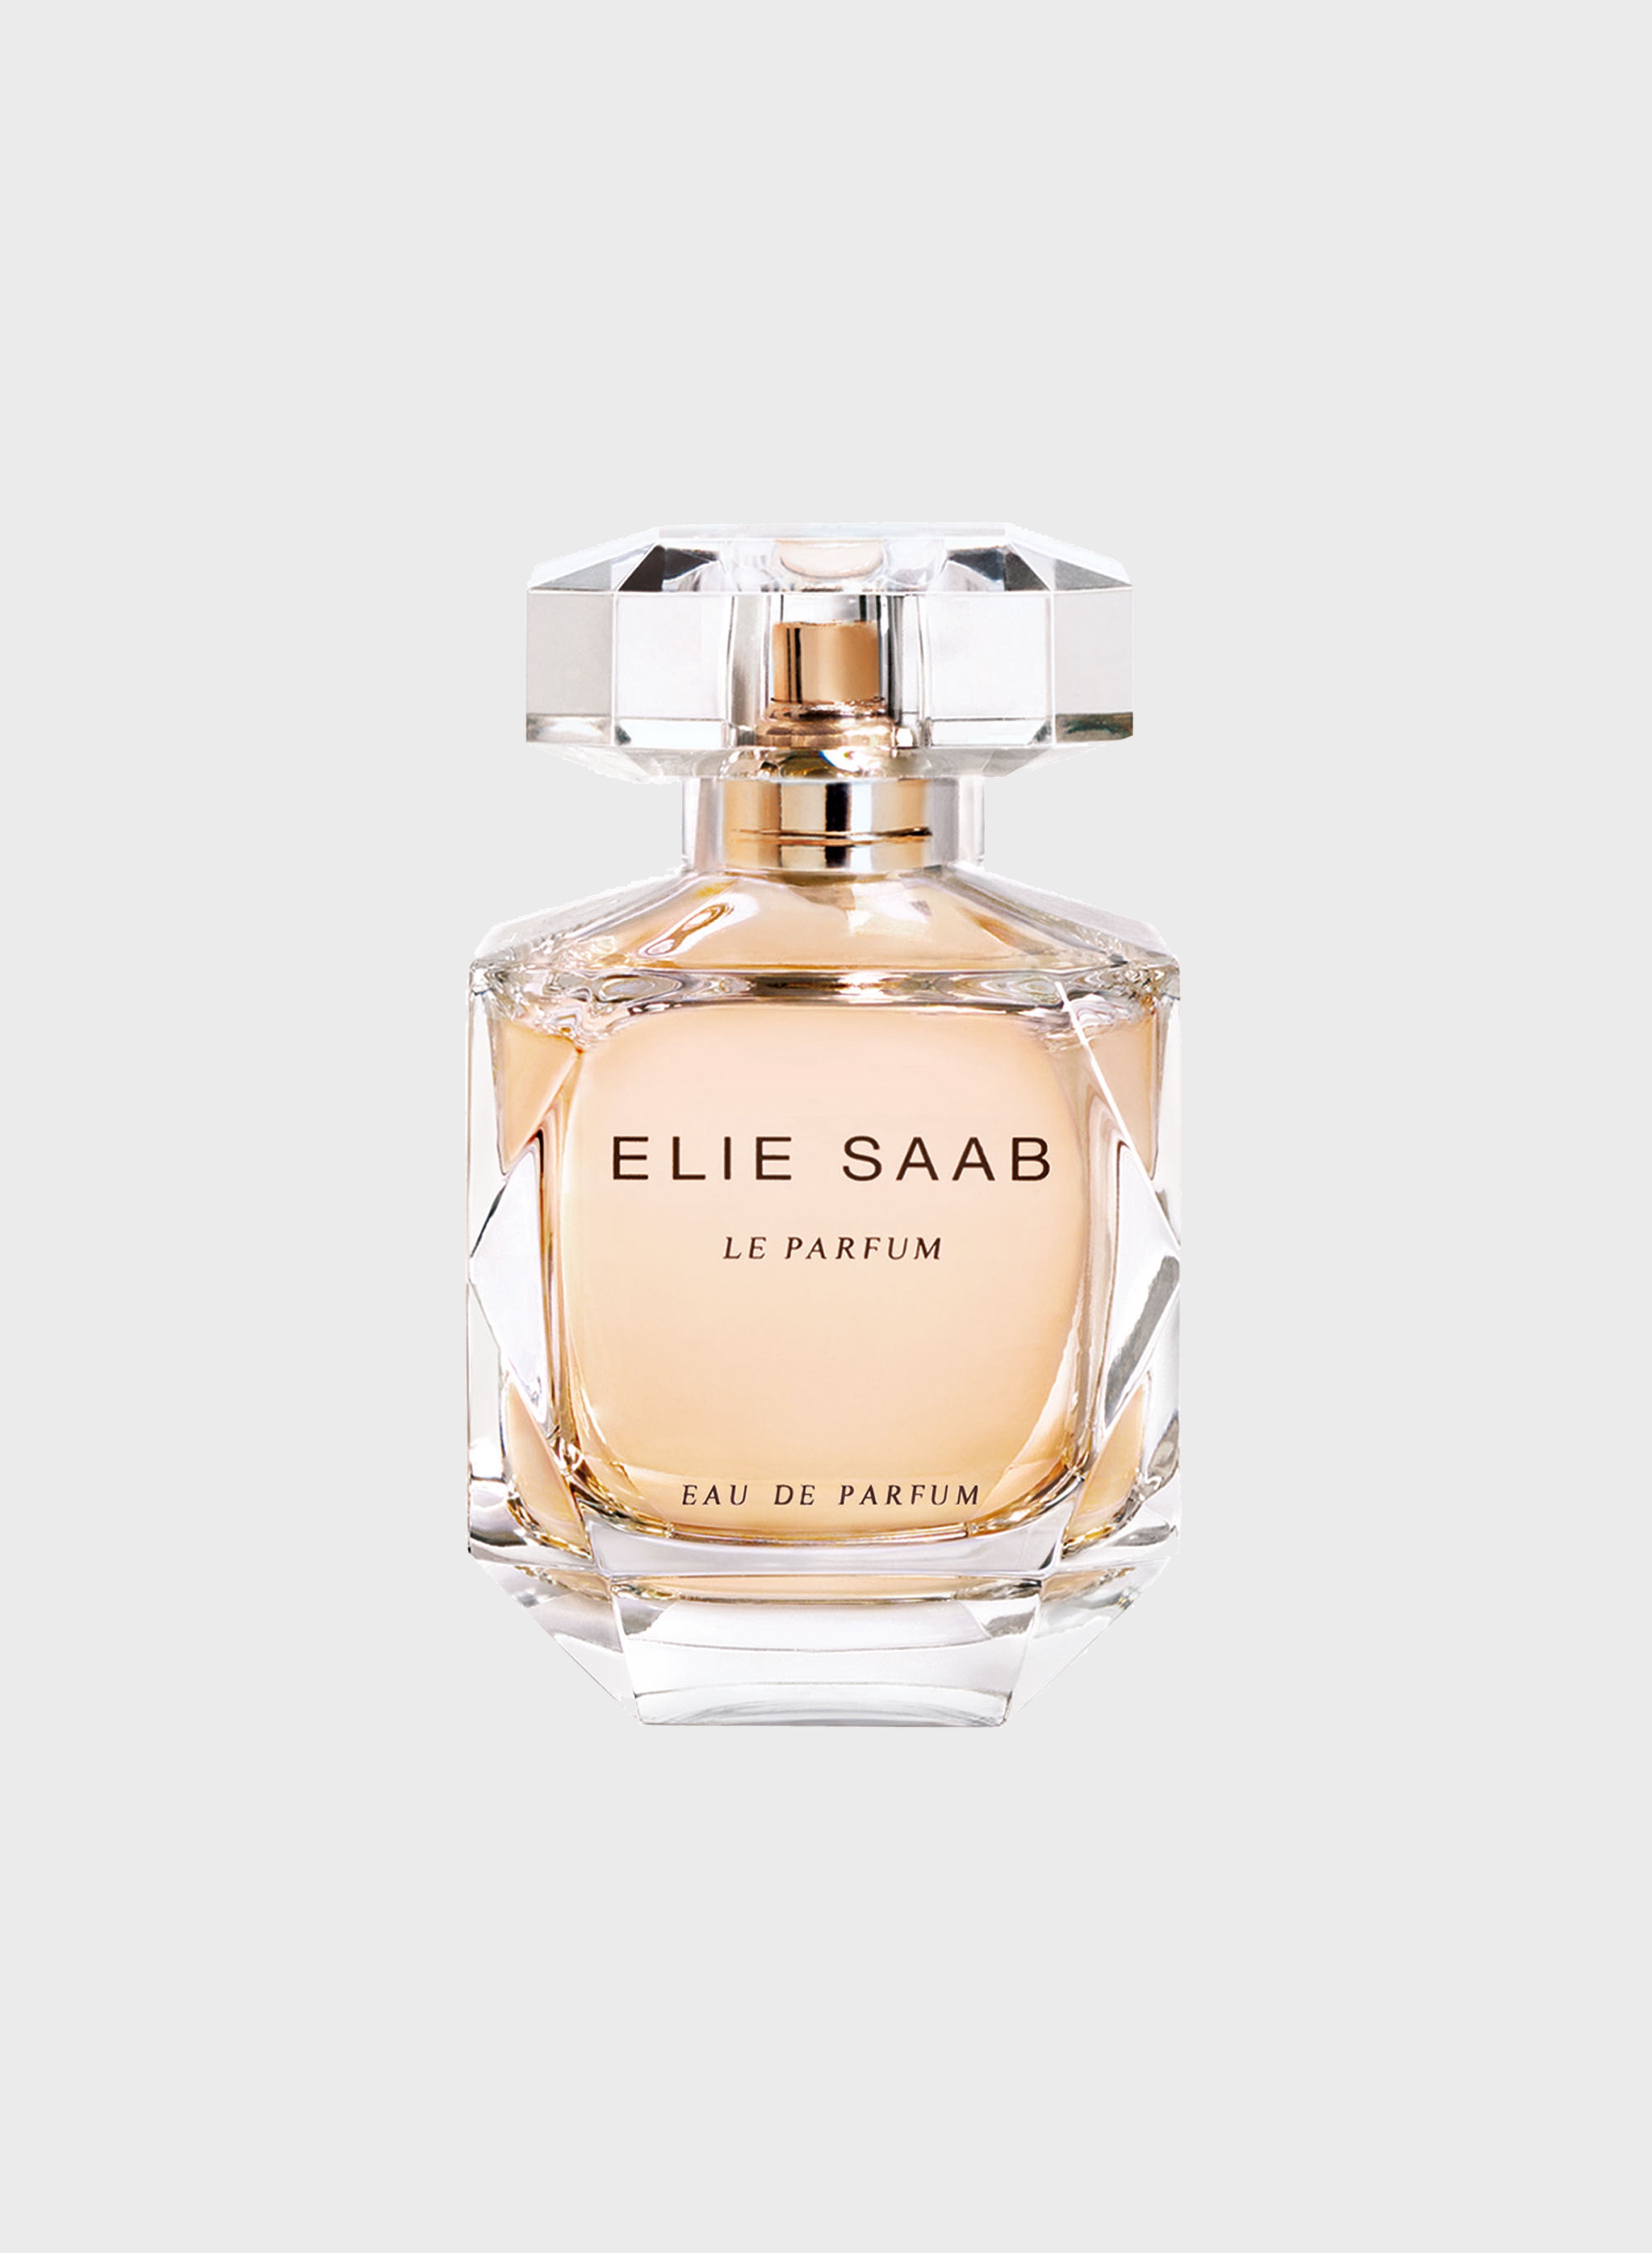 Tact Klaar bestuurder Le Parfum for Women – ELIE SAAB